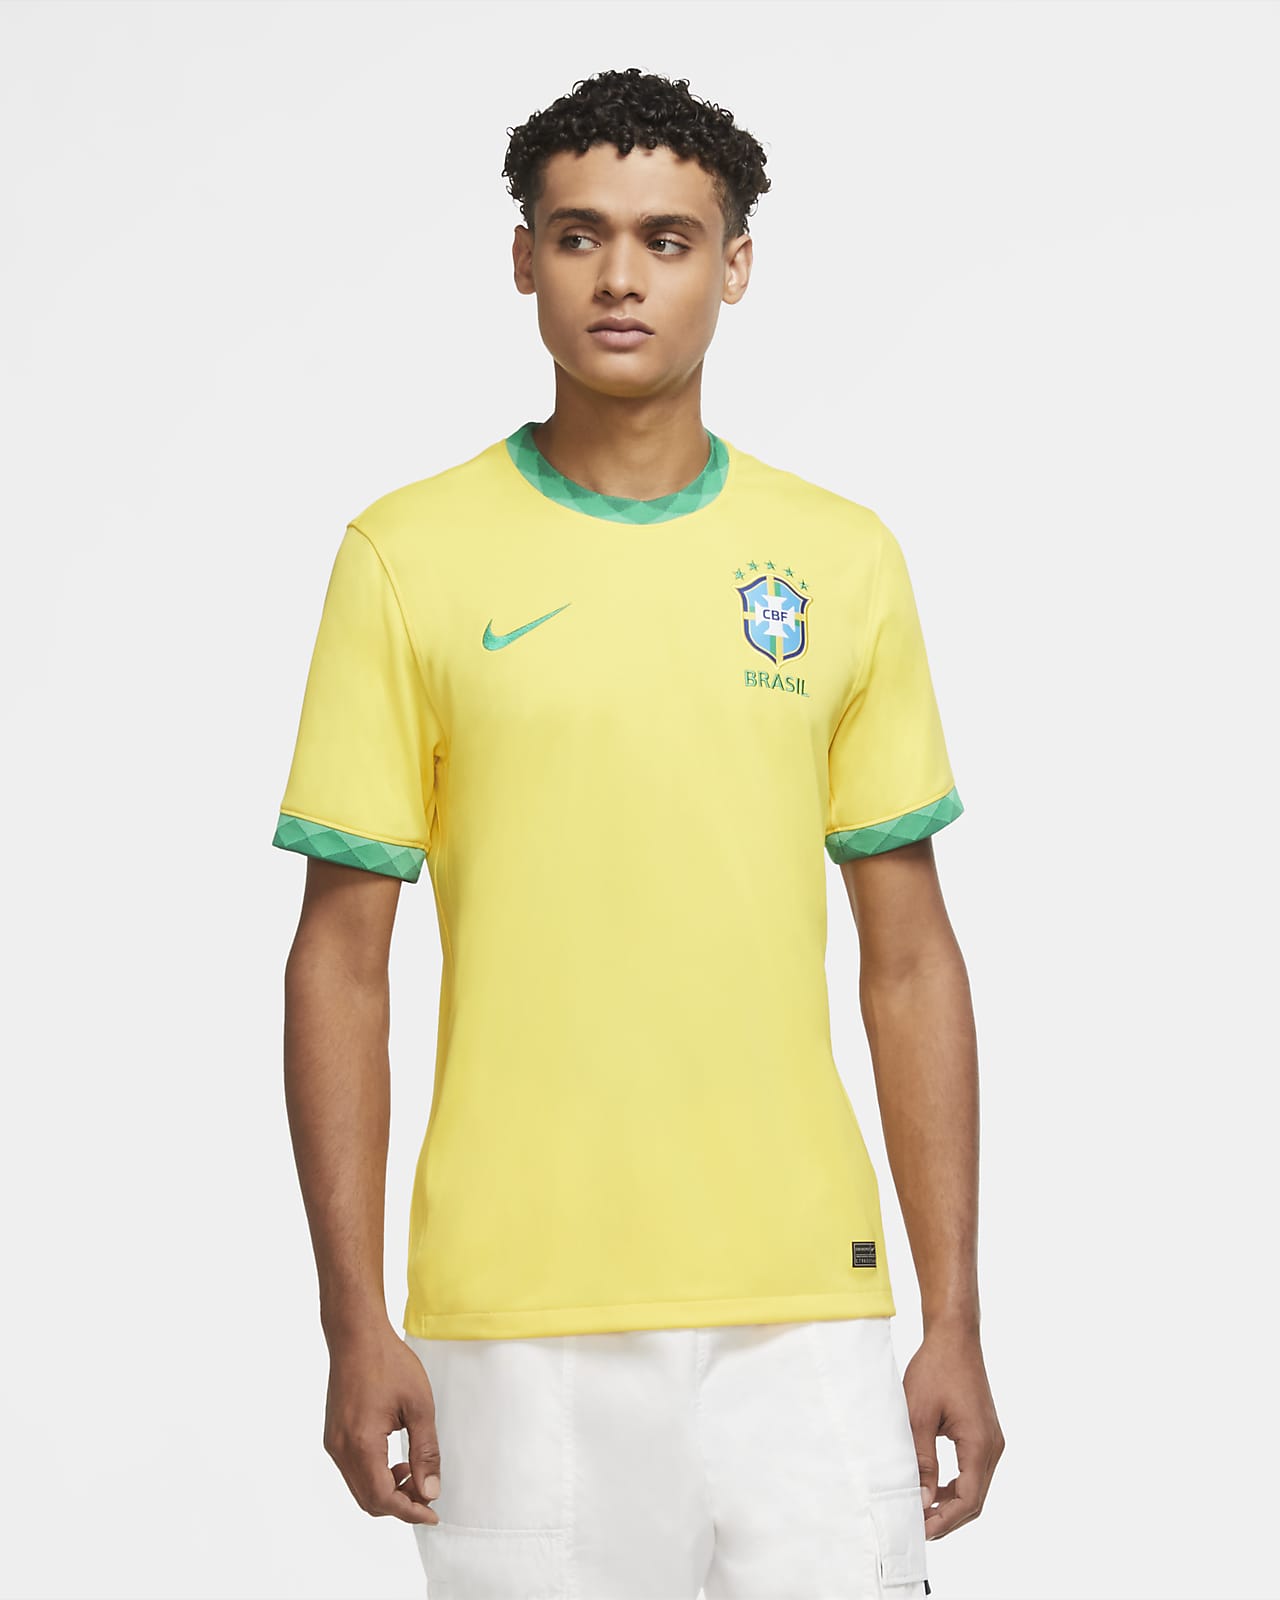 brazil jersey 2020 nike